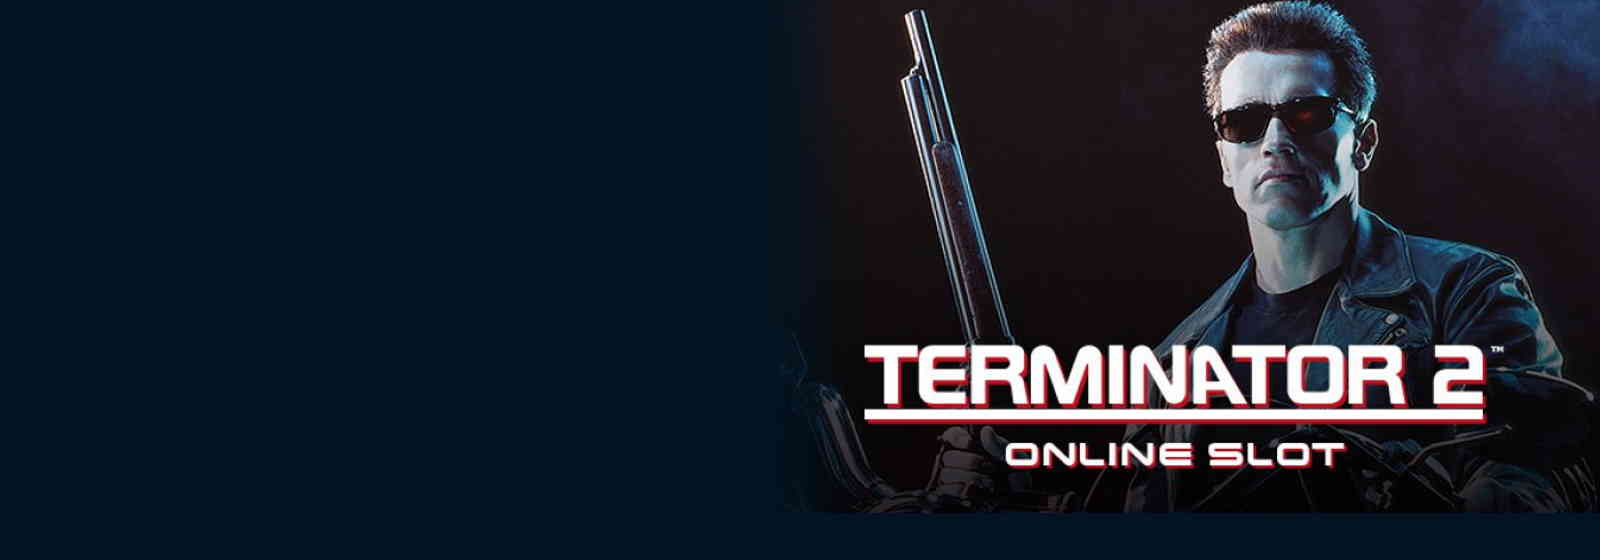 terminator 2 slot game